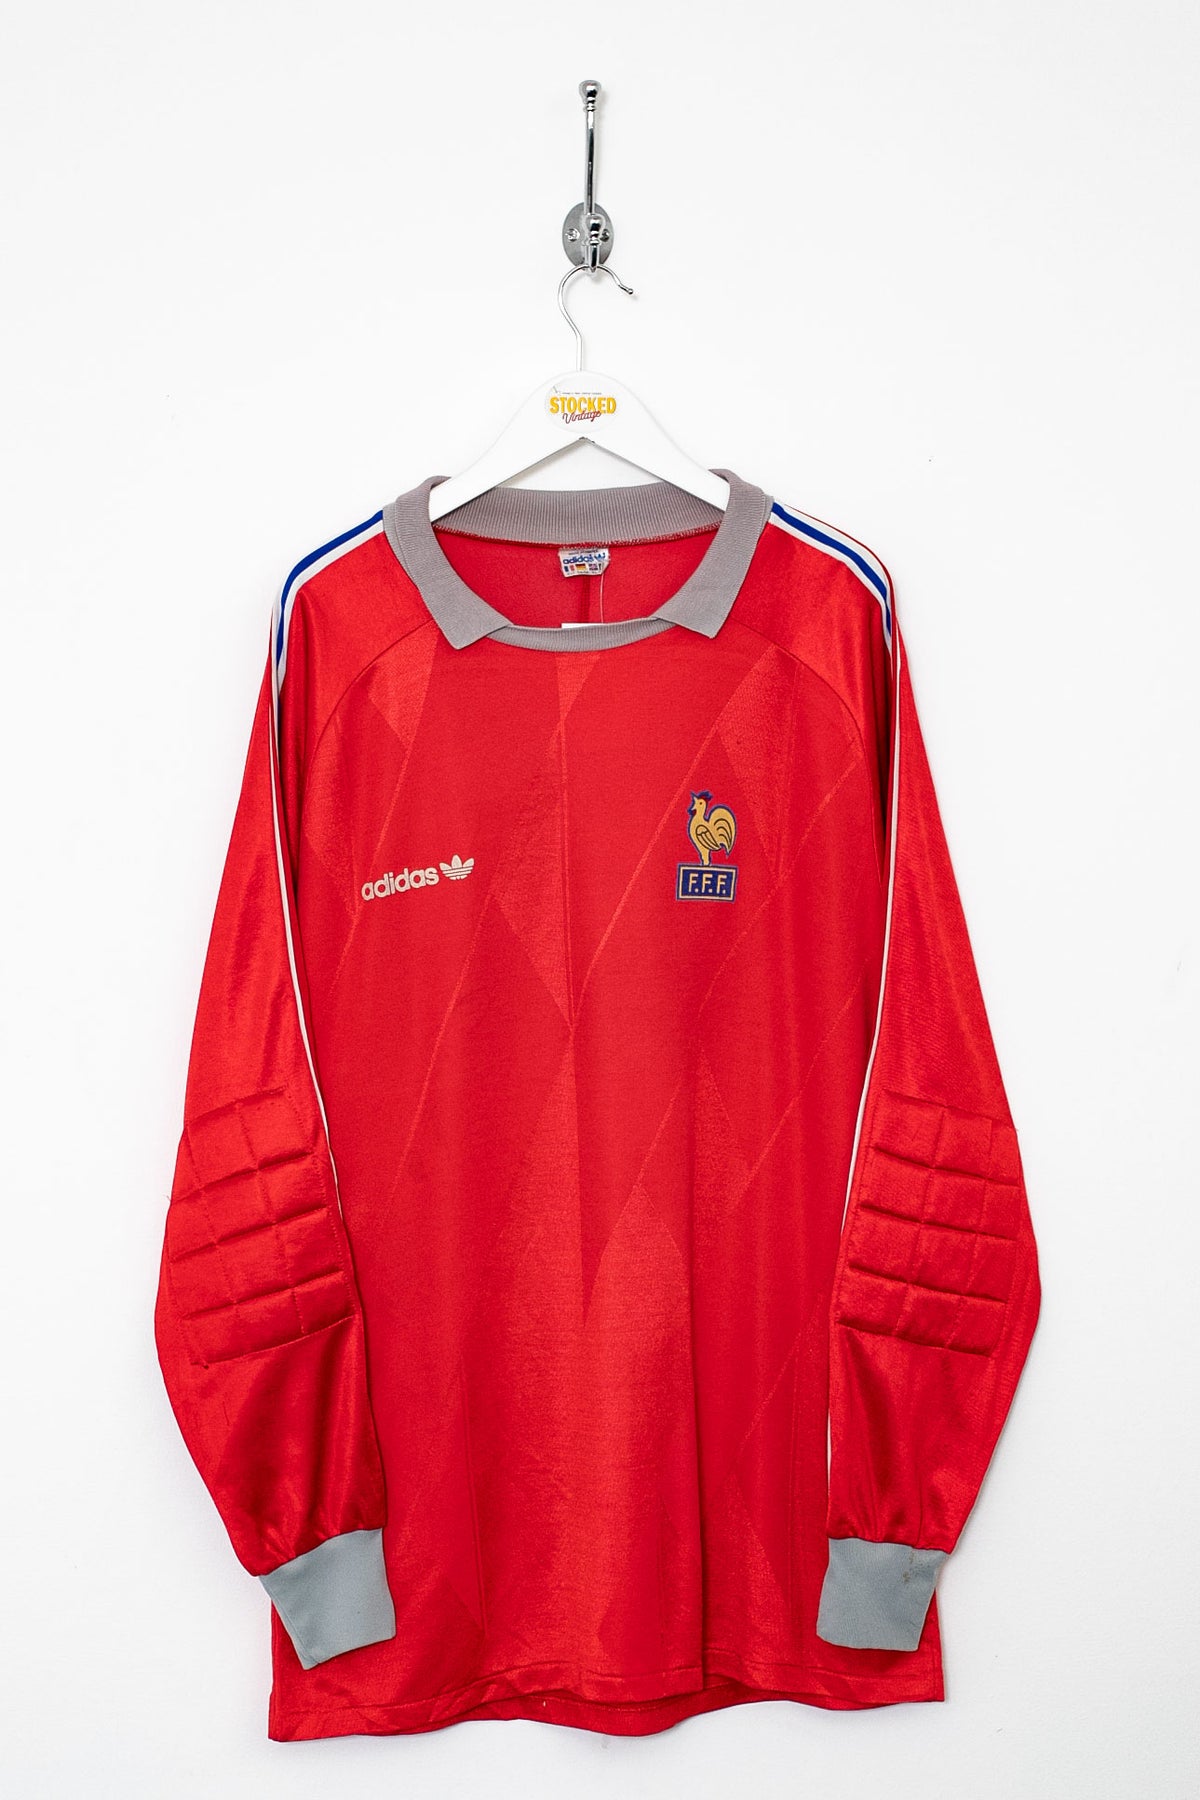 Adidas 1989/90 France Goalkeeper Shirt "16" (L)